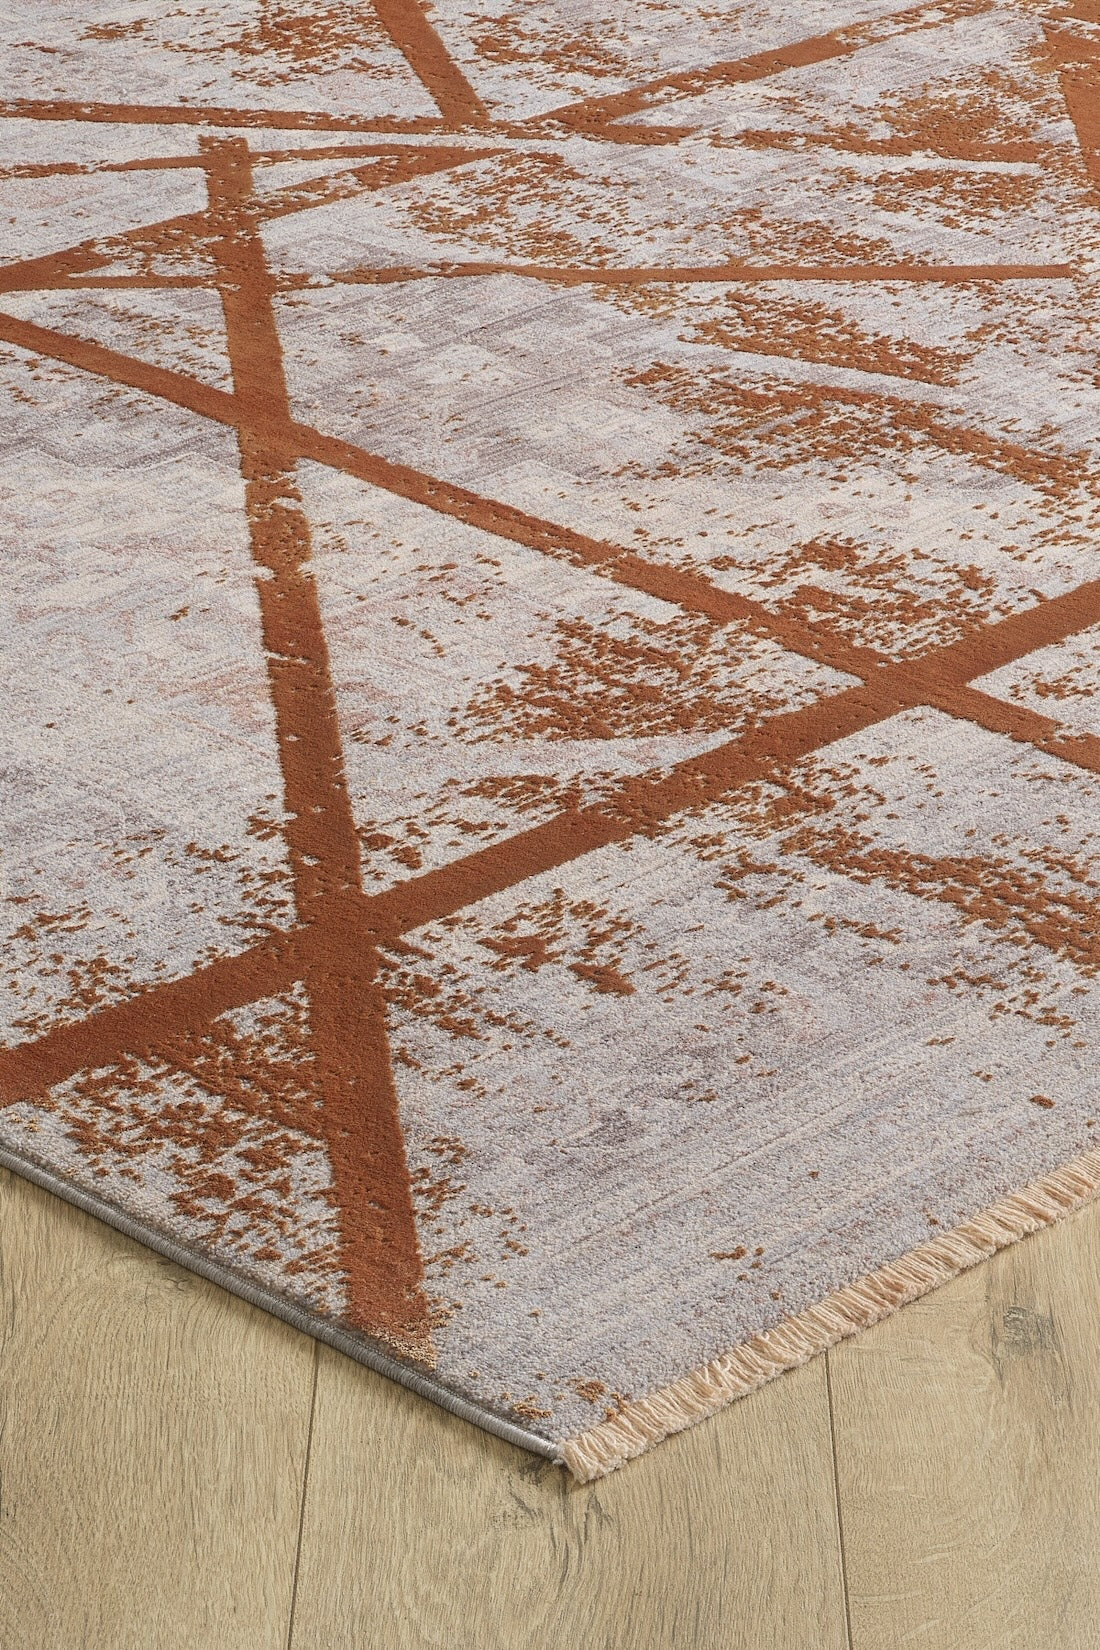 Dominant Lineage Moderner Teppich – Orangerot – HRD007 